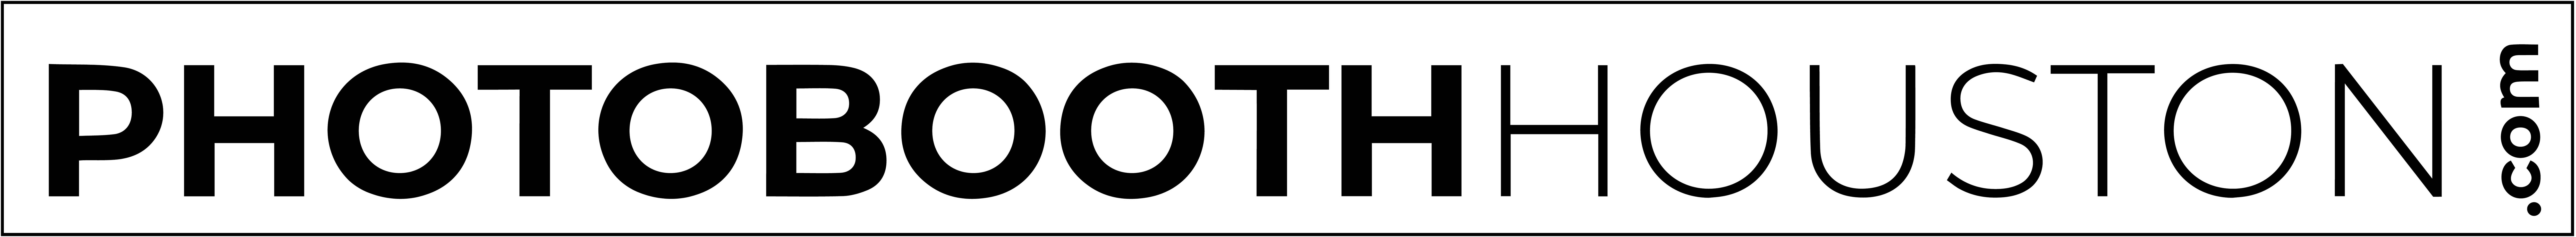 photobooth-dot-com-vector-logo.jpg